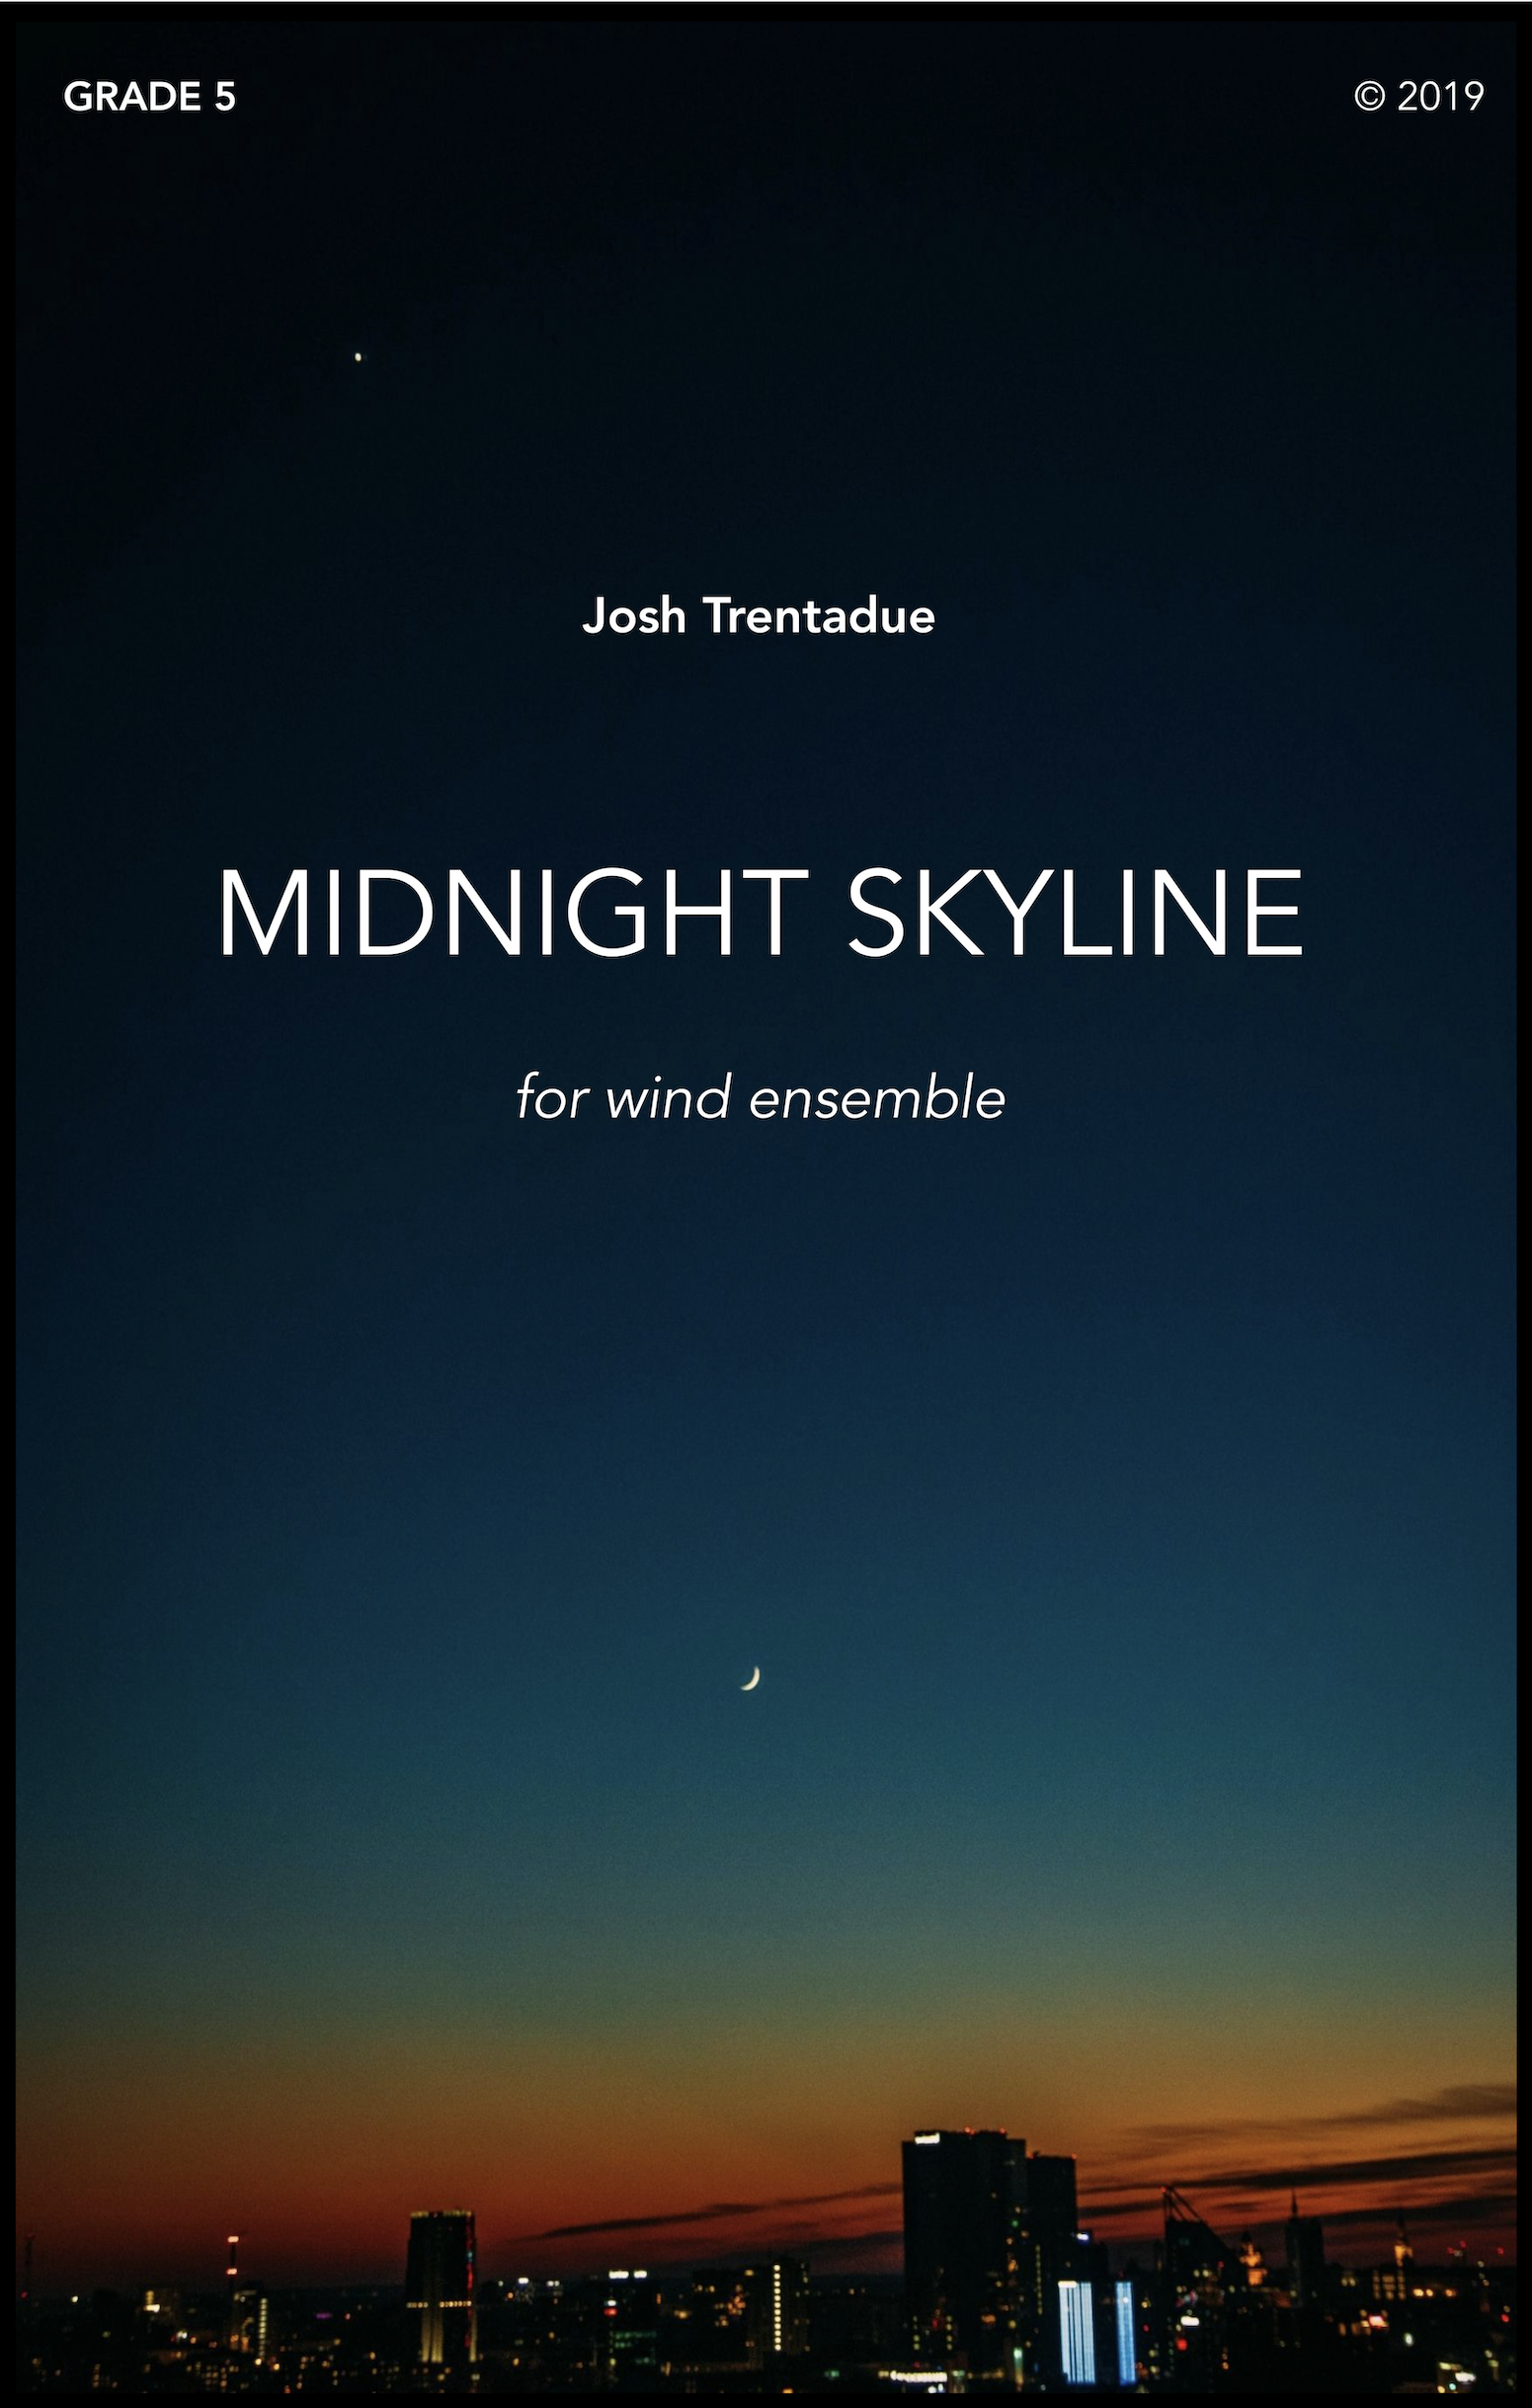 Midnight Skyline by Josh Trentadue